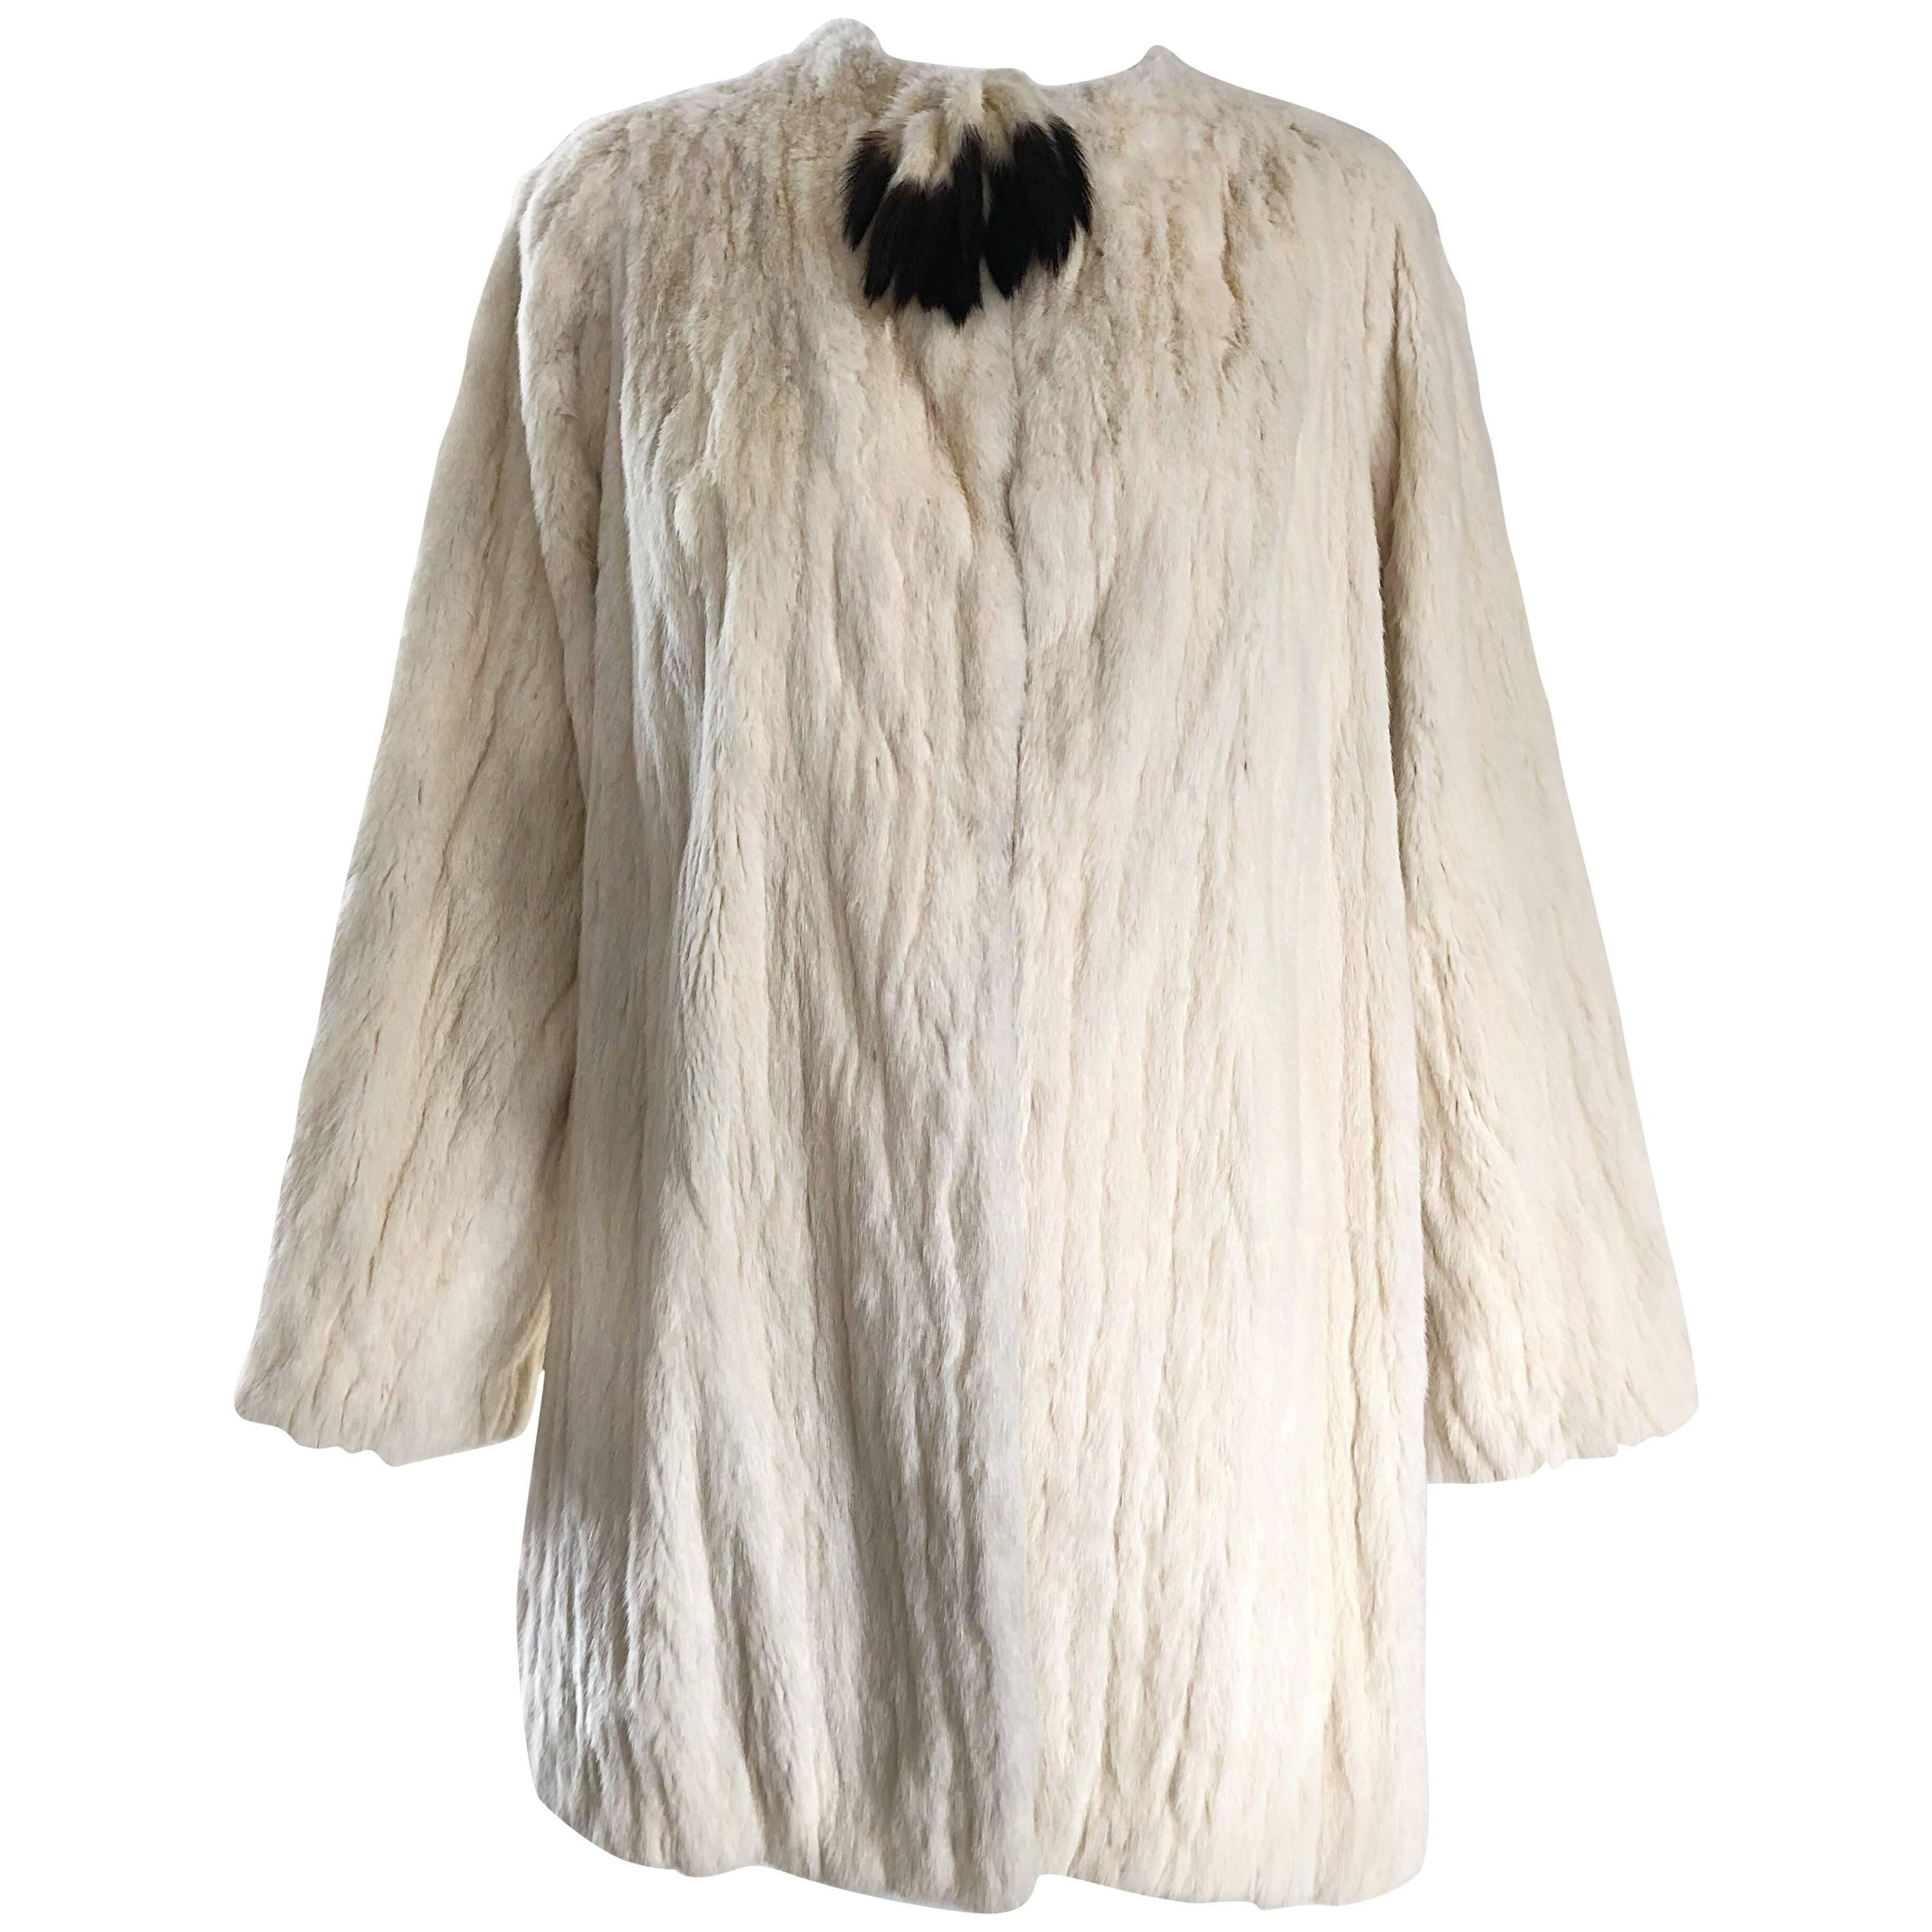 Rare 1930 Ermine Winter White Luxurious Fur Jacket Coat w/ Tail Collar Detail